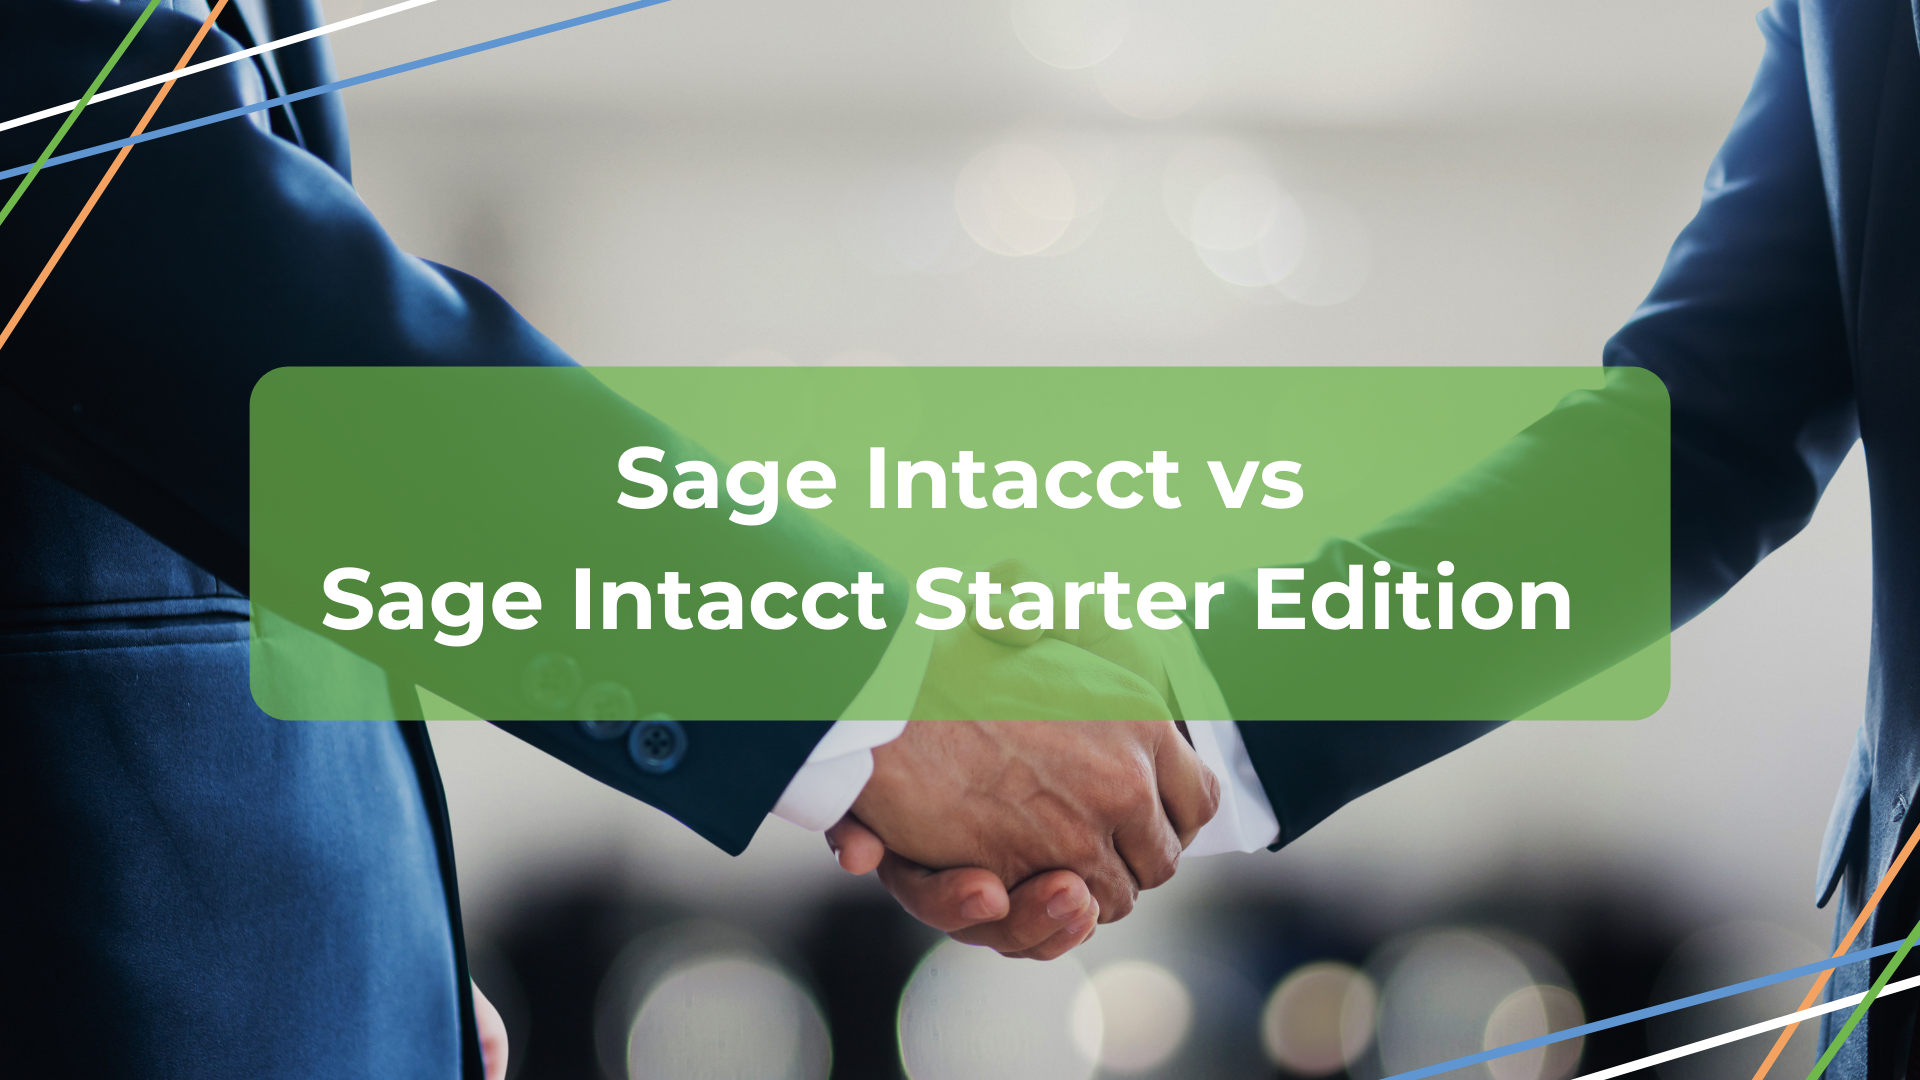 Sage Intacct Starter Edition